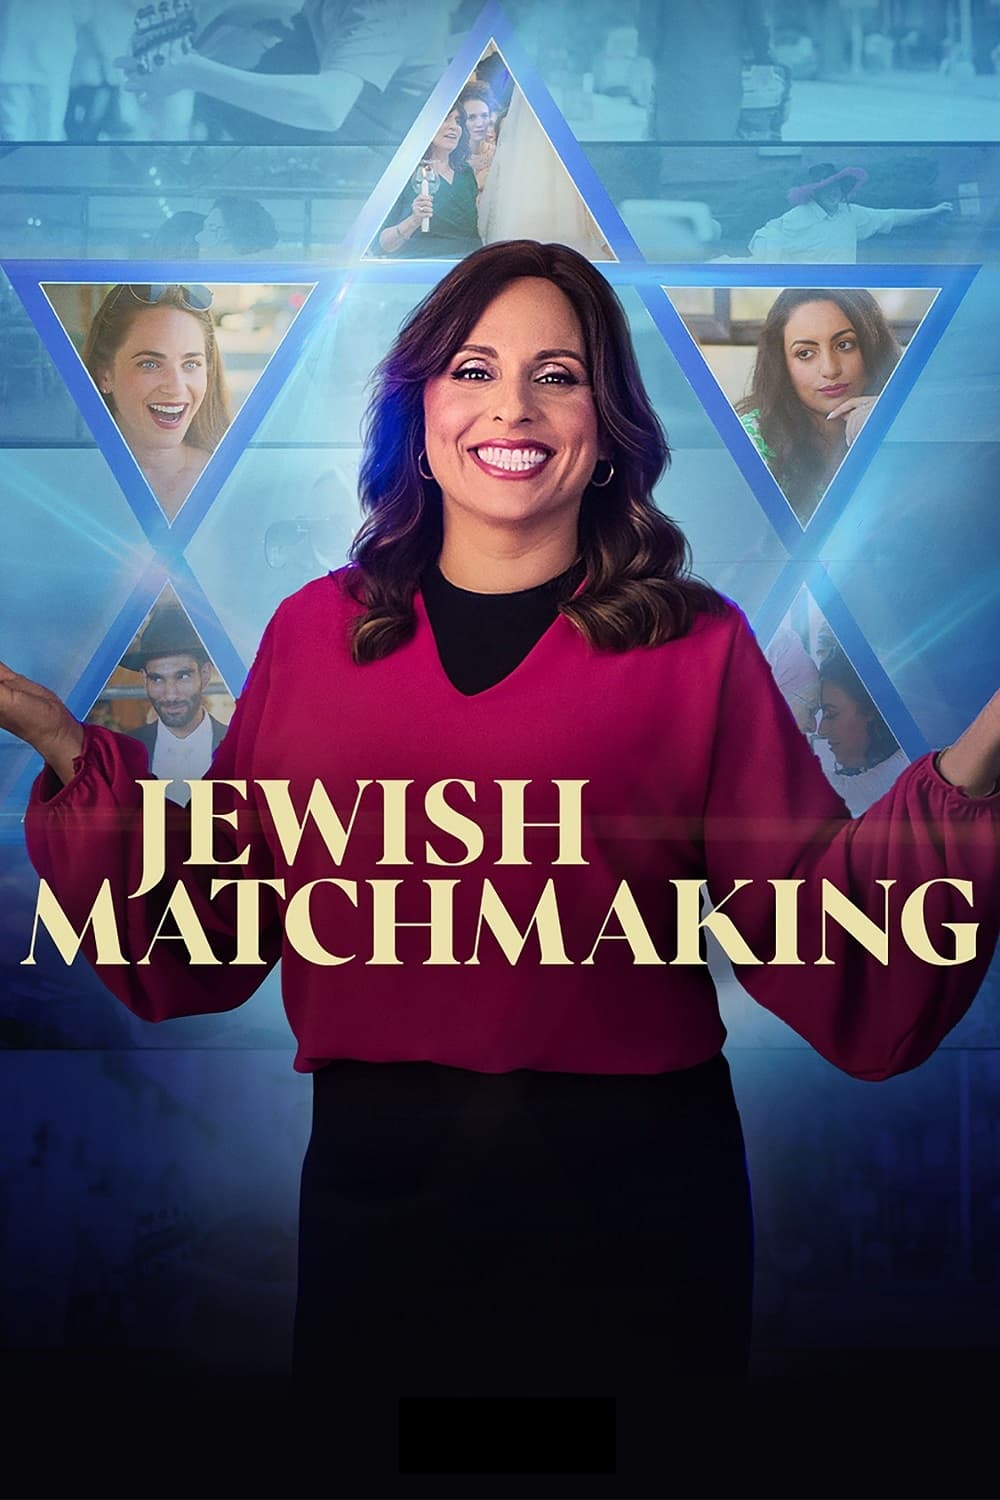 Jewish Matchmaking poster